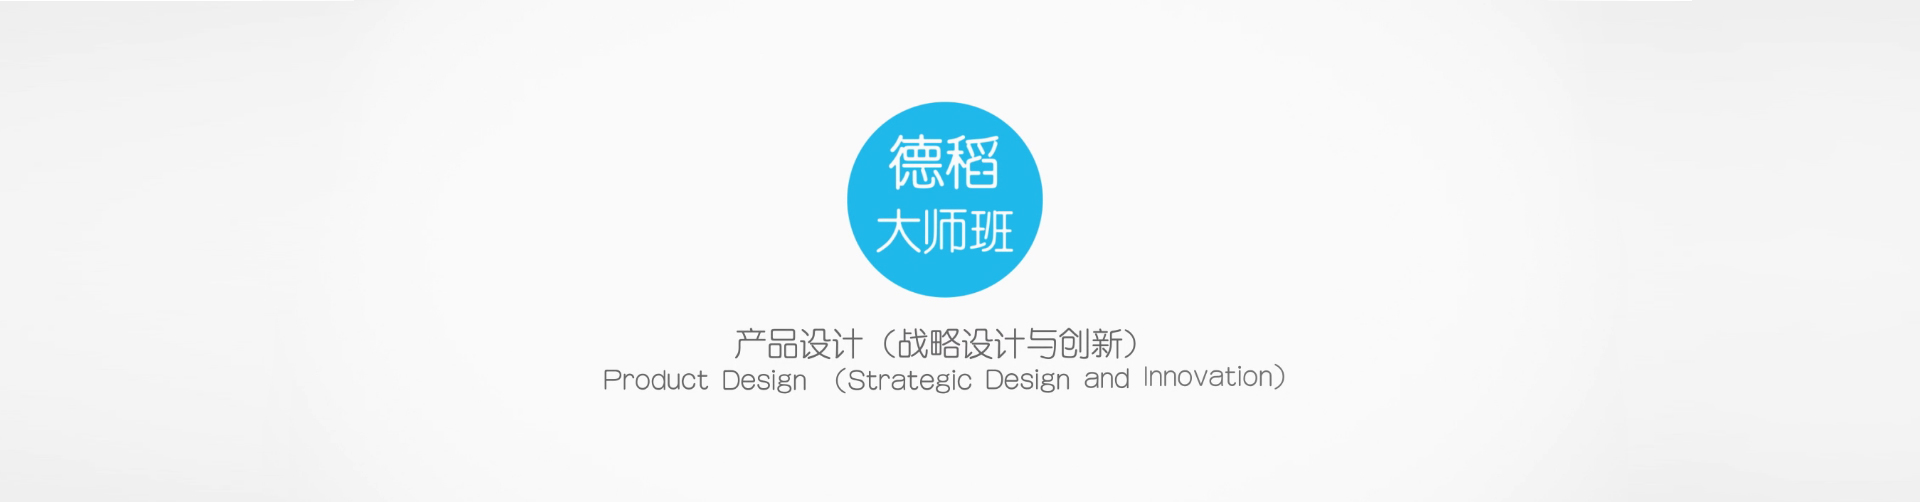 Strategic Design and Innovation